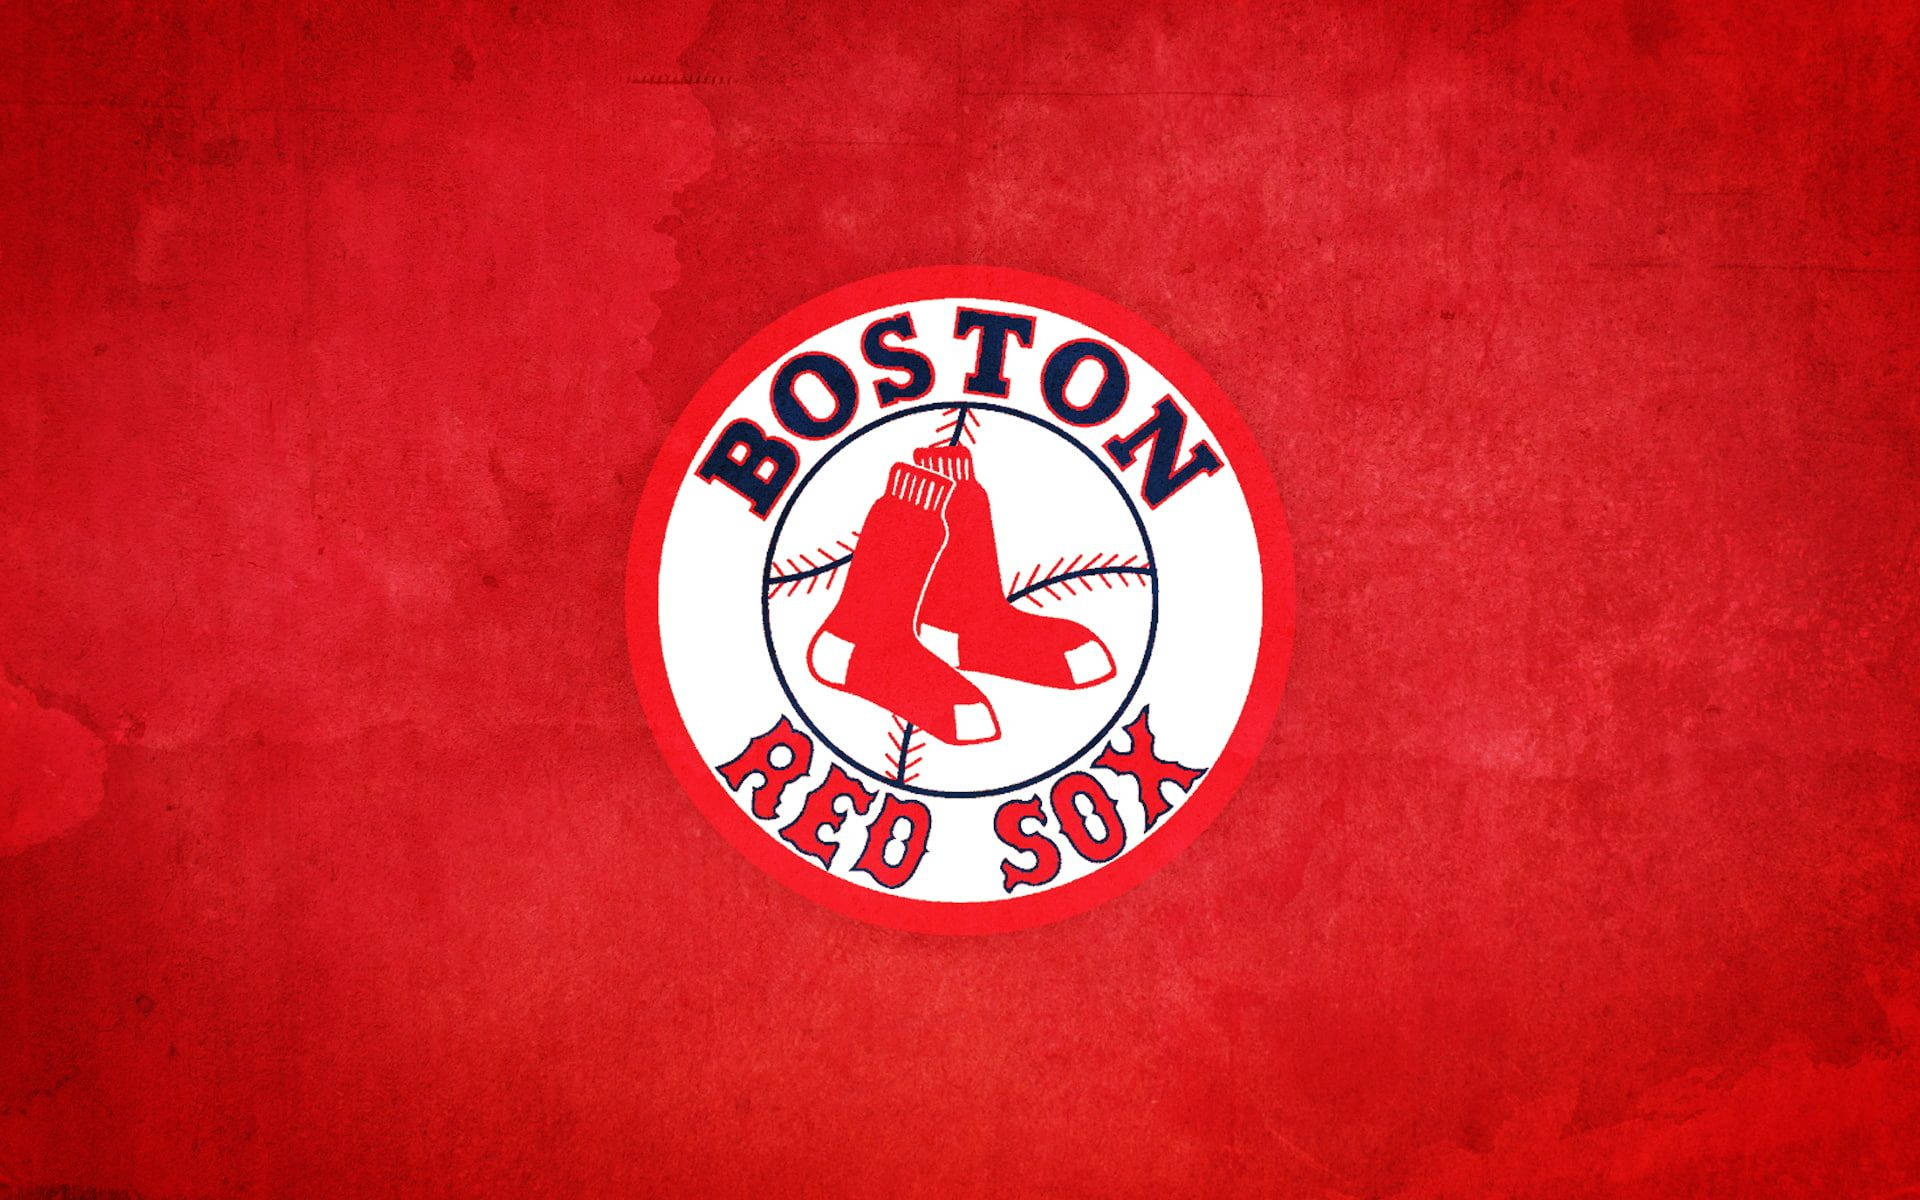 Boston Red Sox Fiery Color Wallpaper